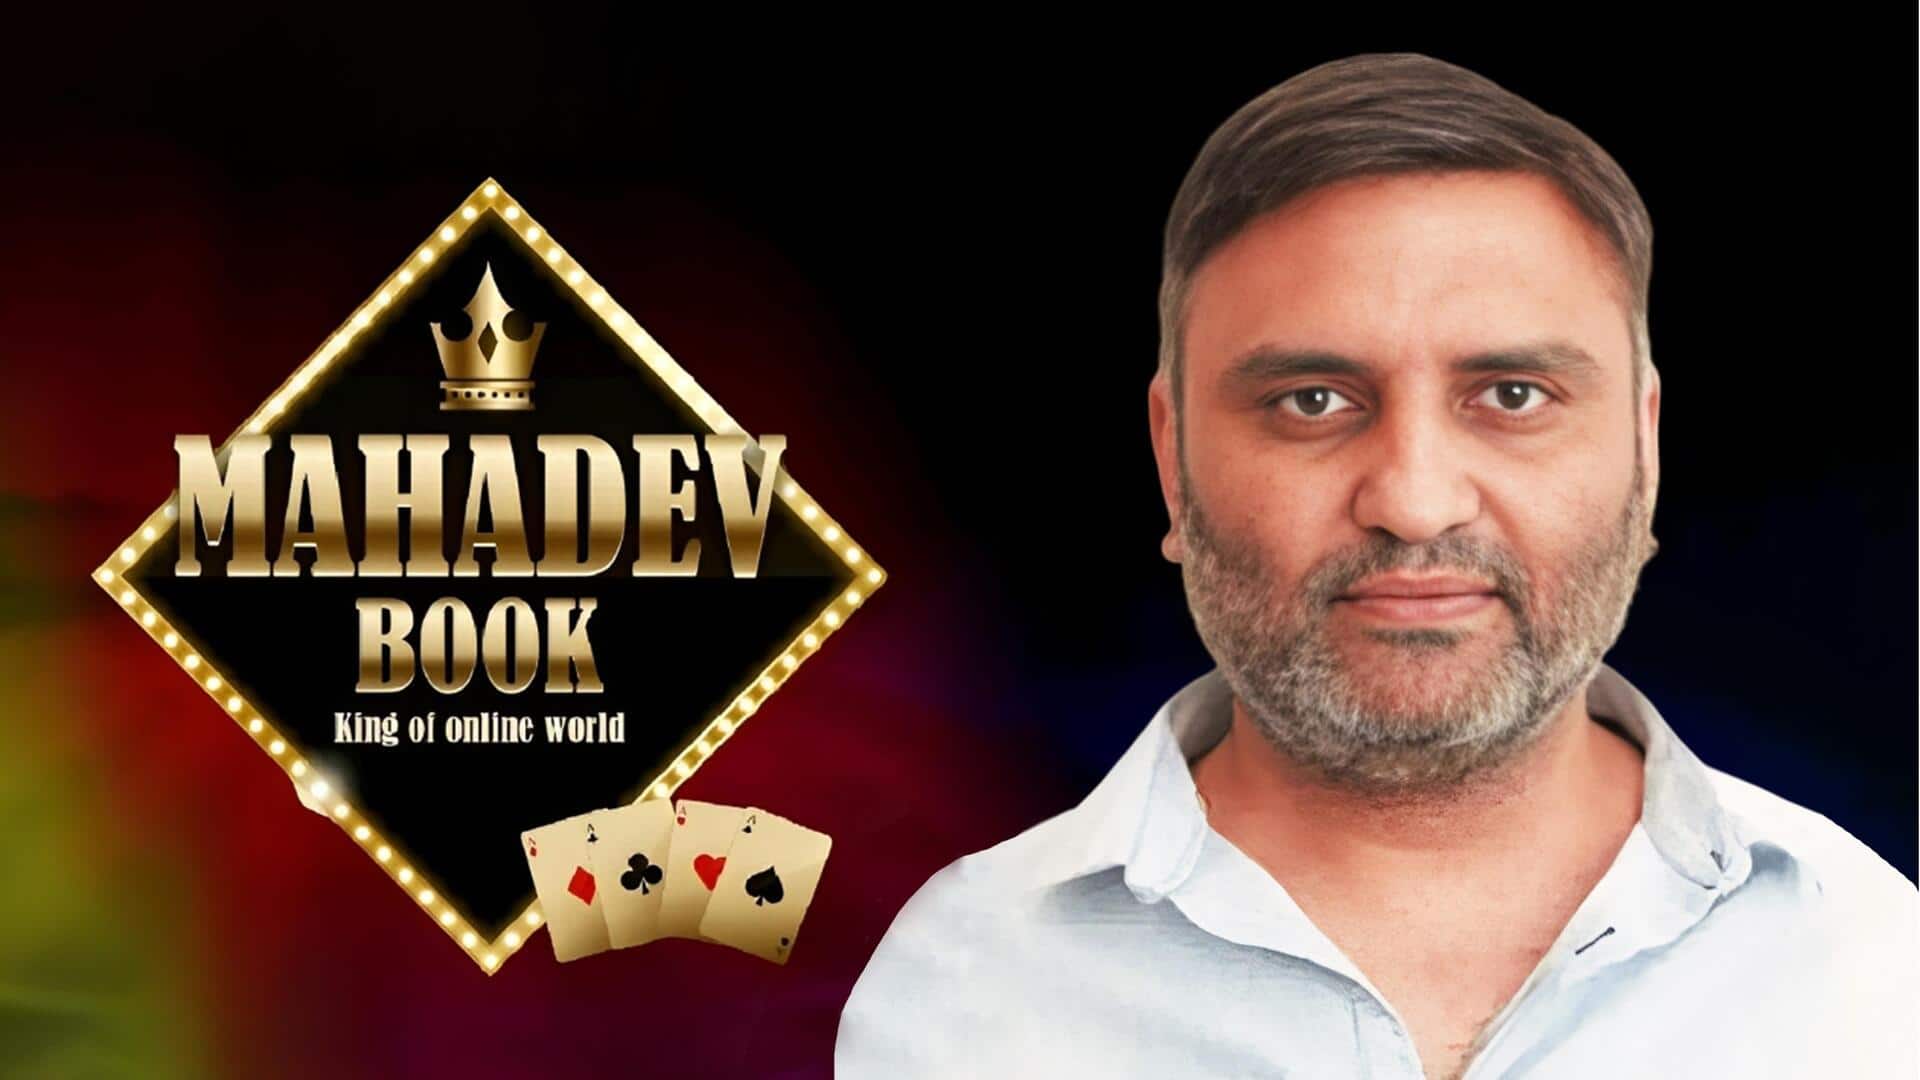 Mahadev betting app case: దుబాయ్‌లో పట్టుబడిన మహాదేవ్ బెట్టింగ్ యాప్ యజమాని 